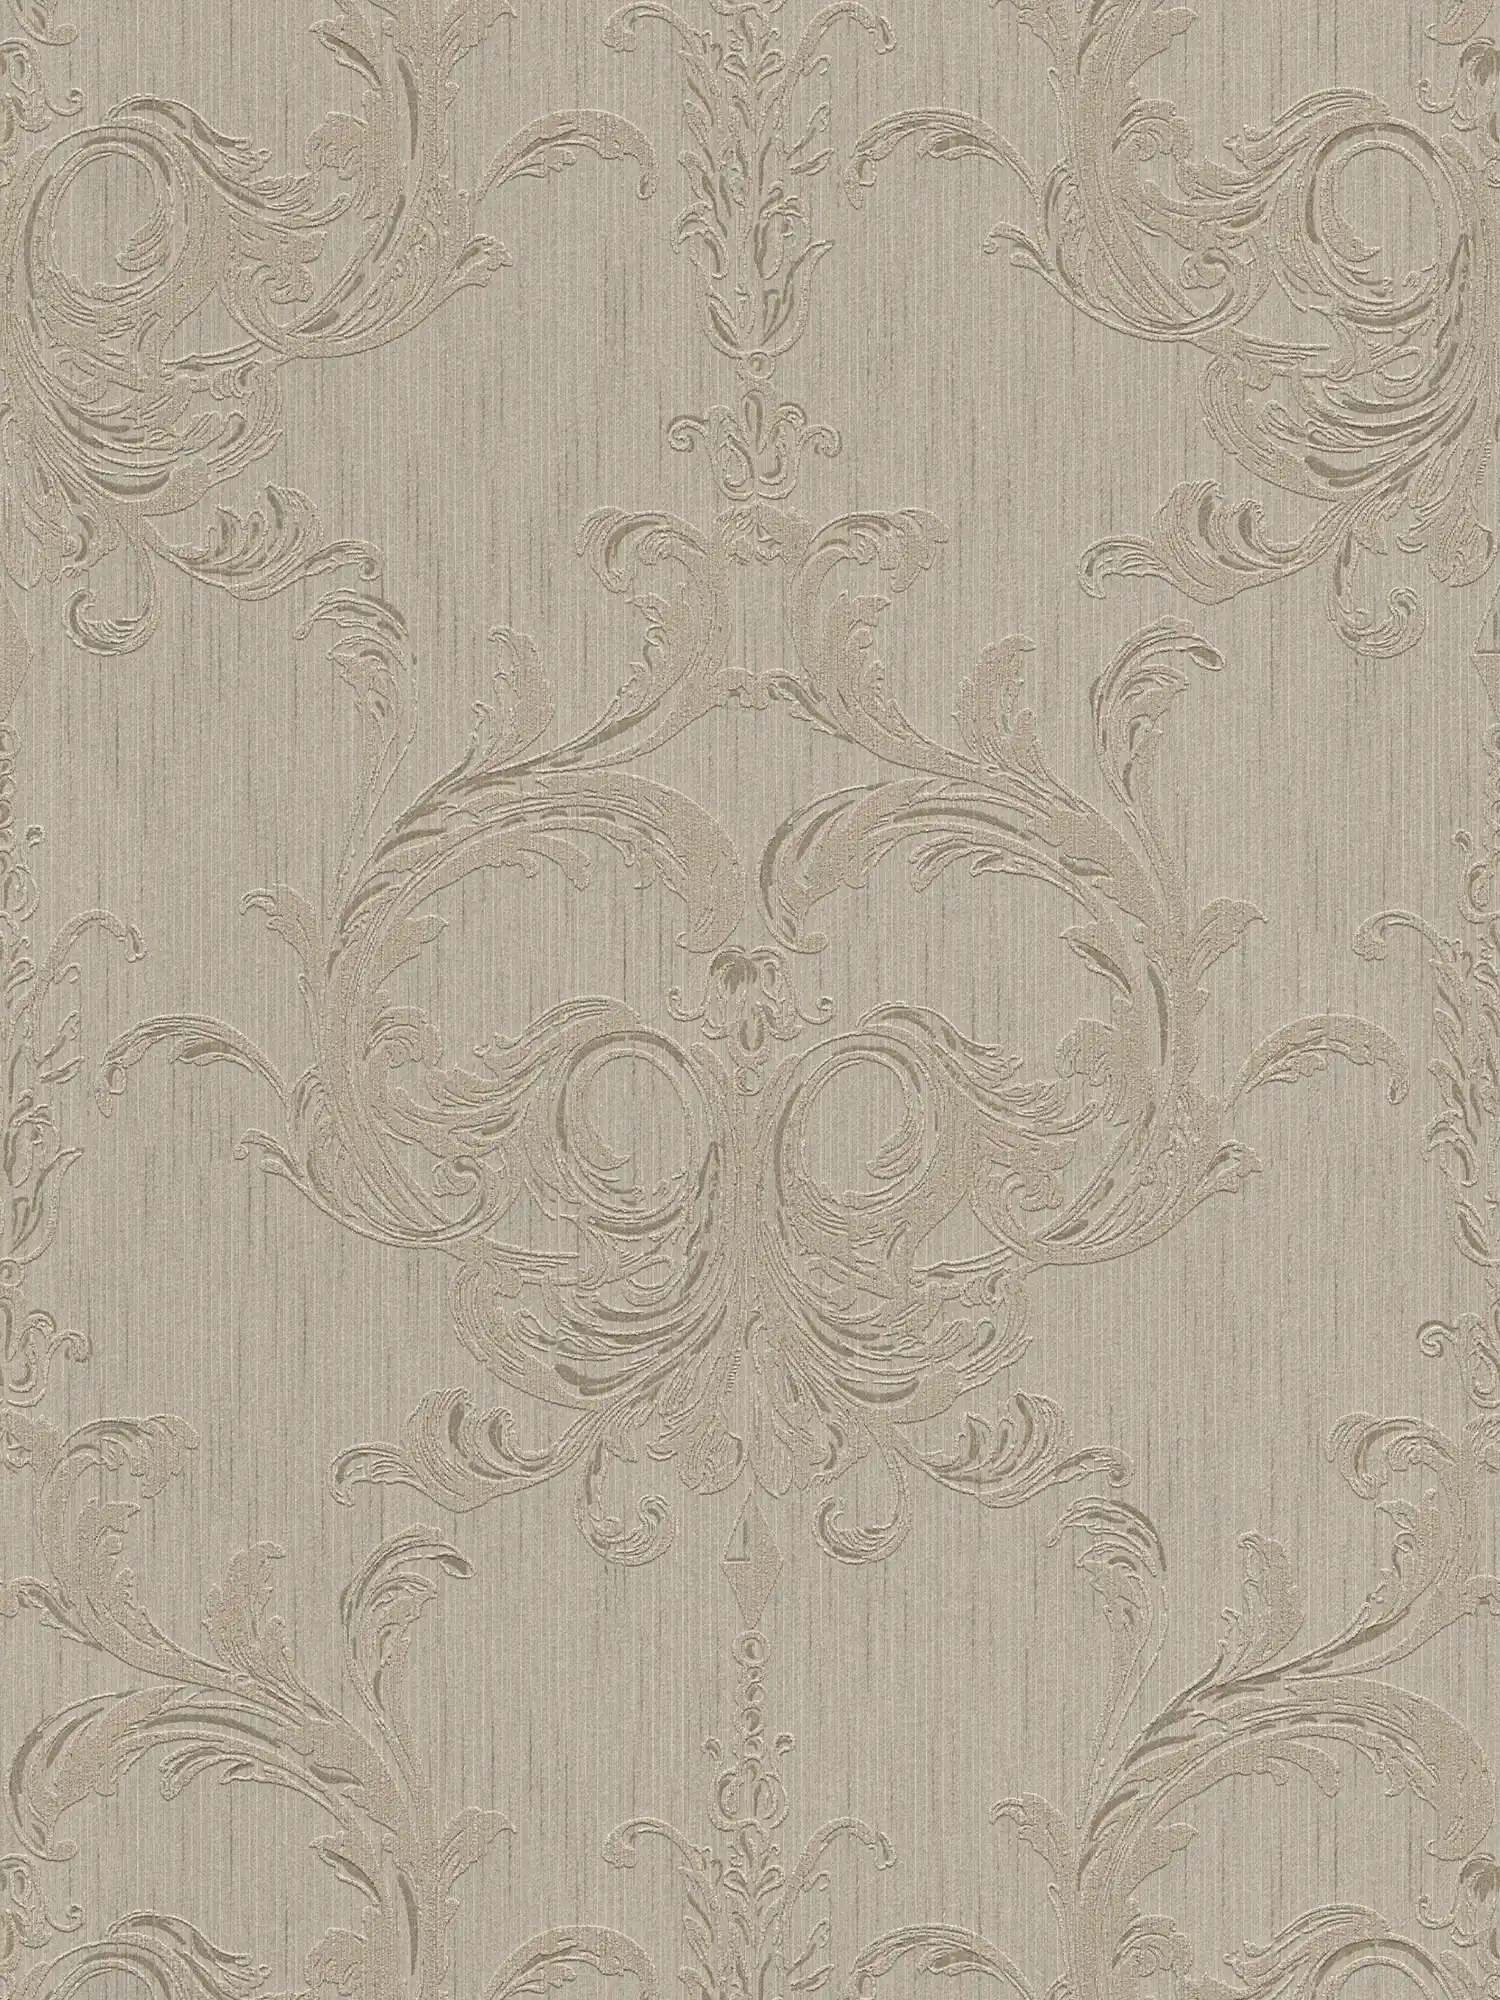 Elegante Tapete mit filigranem Ornament Design – Braun
